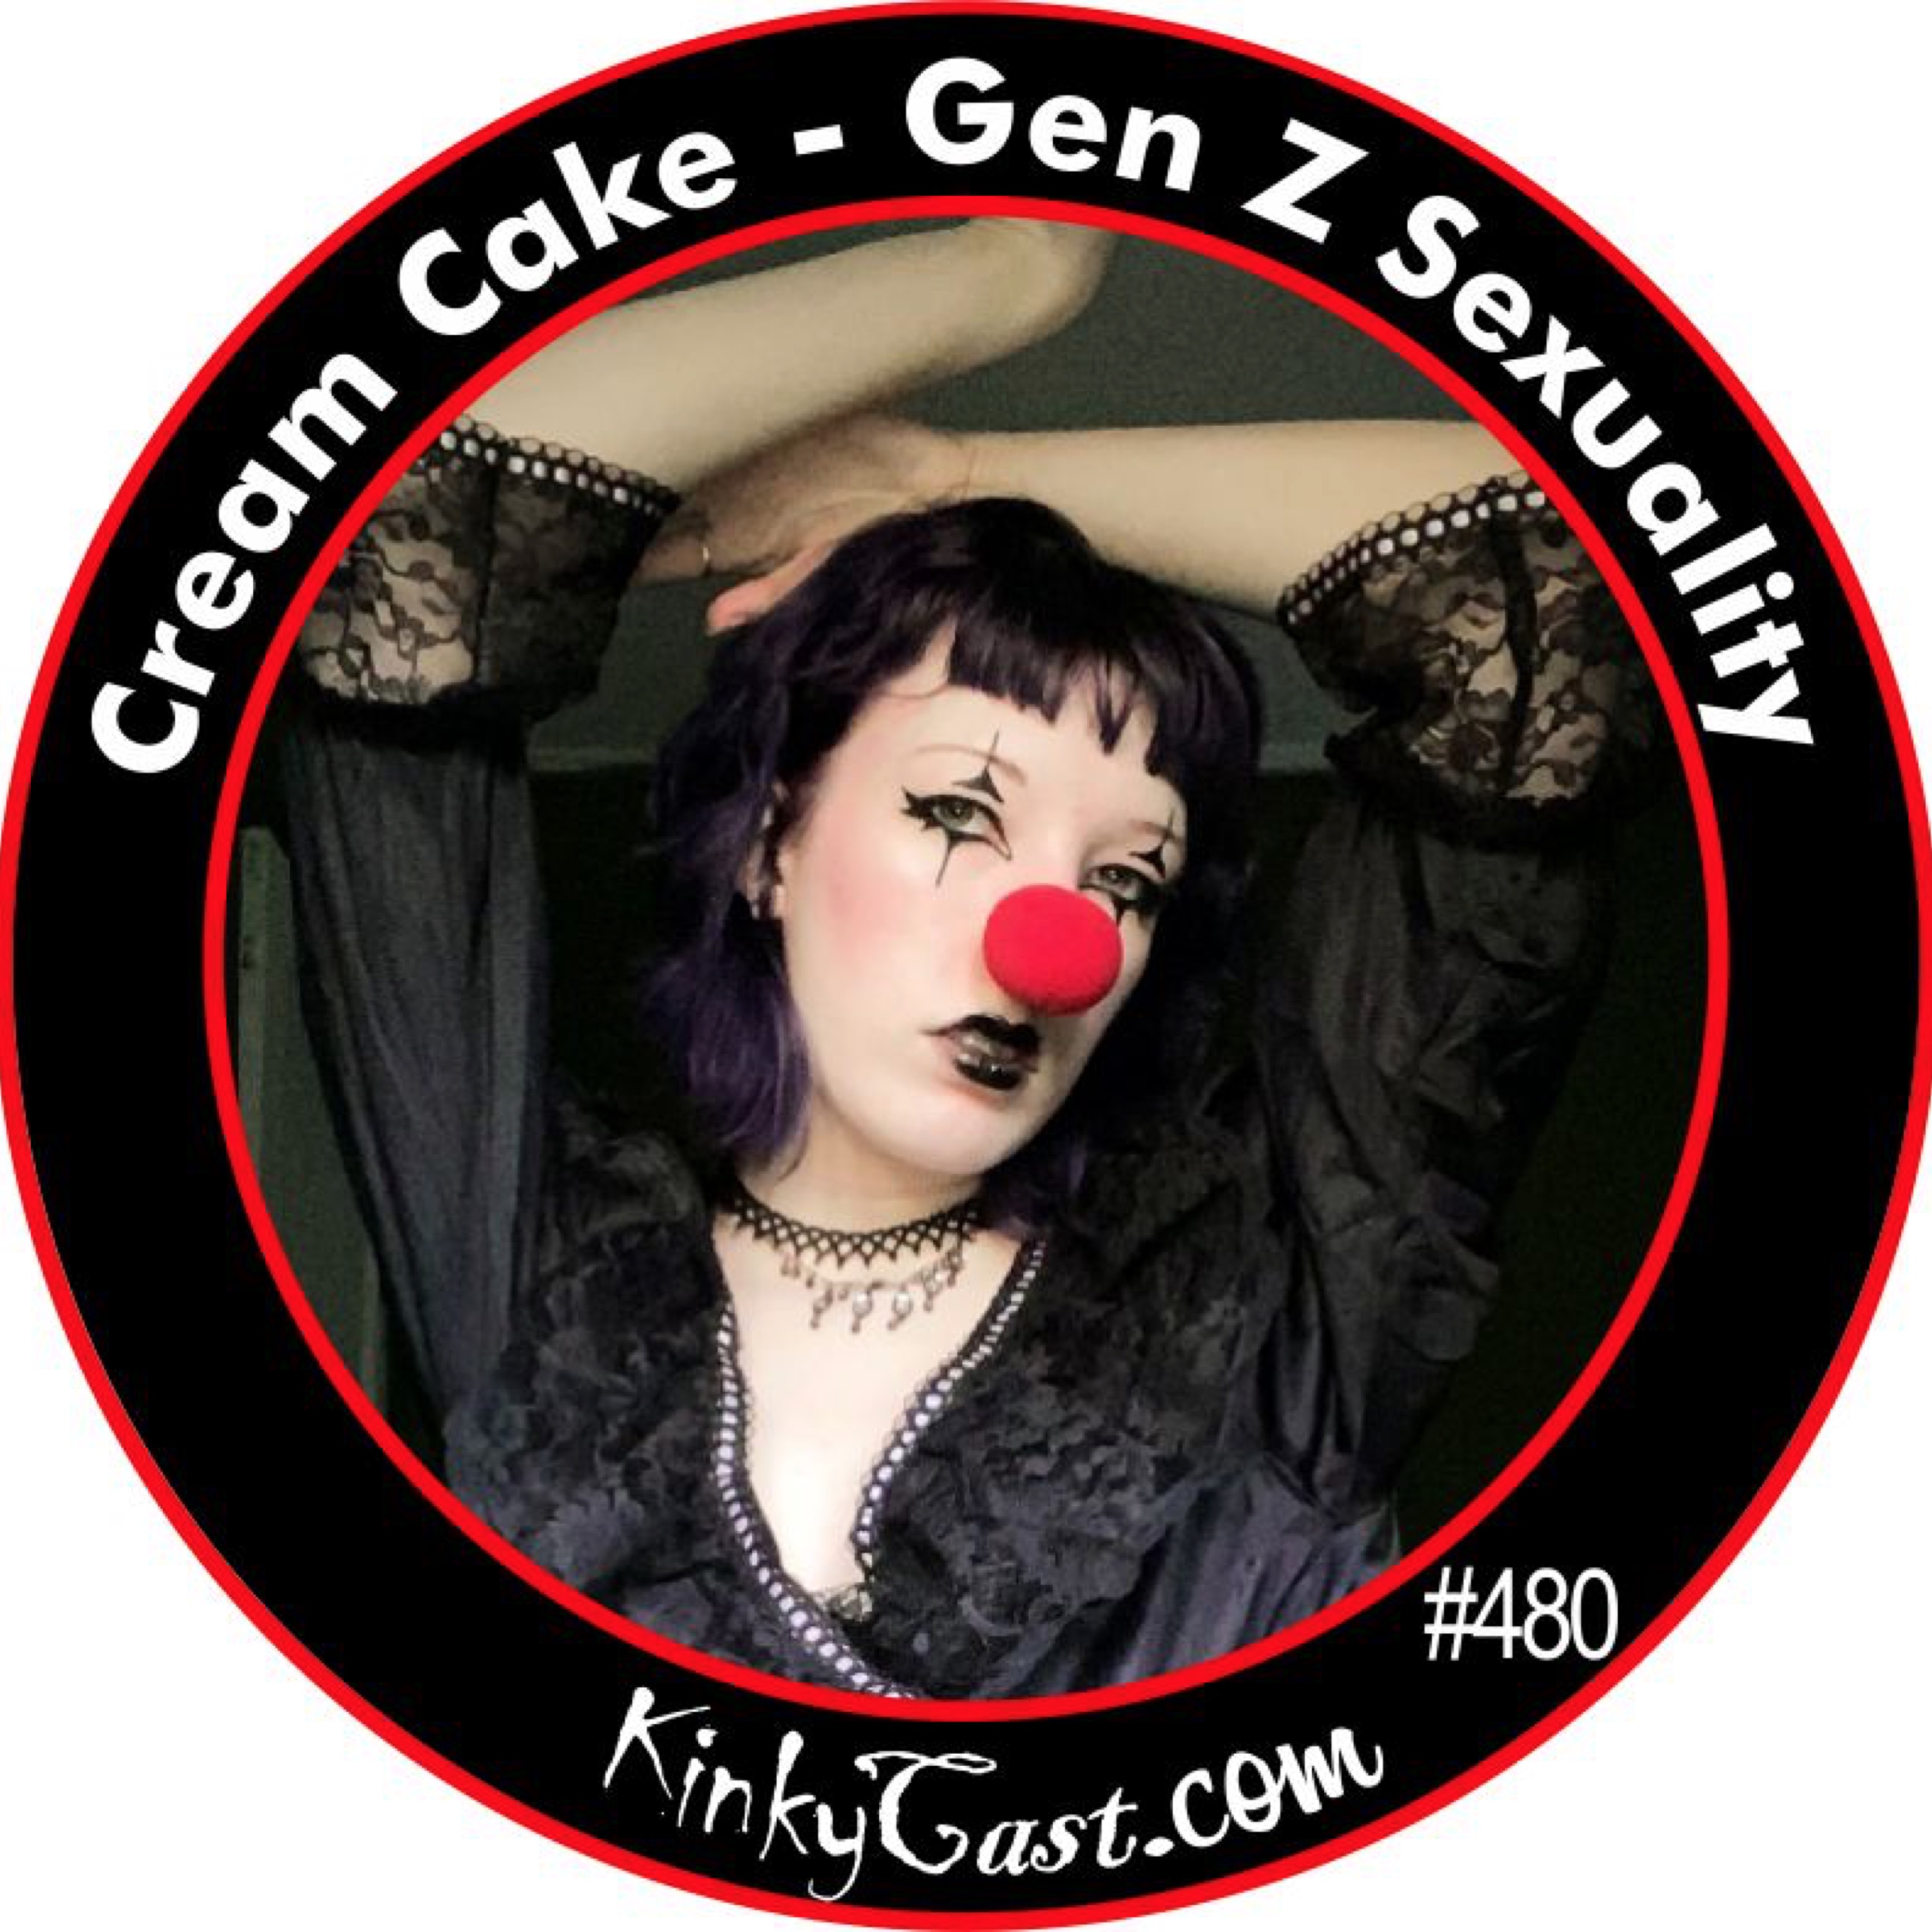 #480 - Cream Cake - Gen Z Sexuality